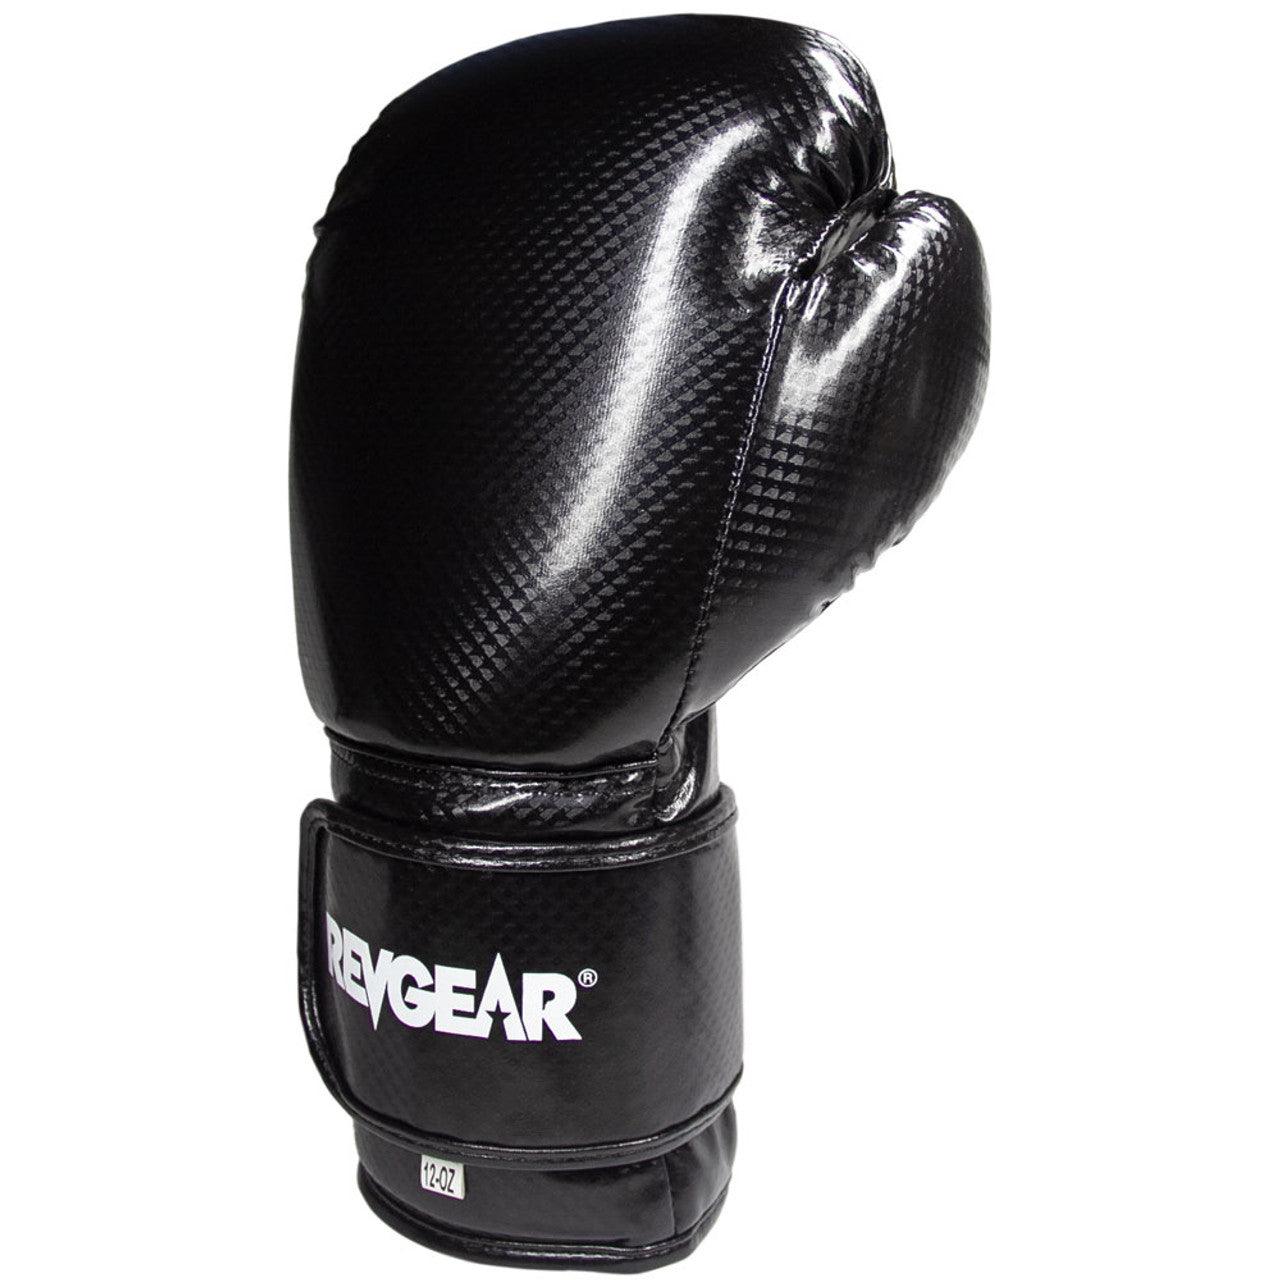 Pinnacle P2 Boxing Gloves - Black - Violent Art Shop